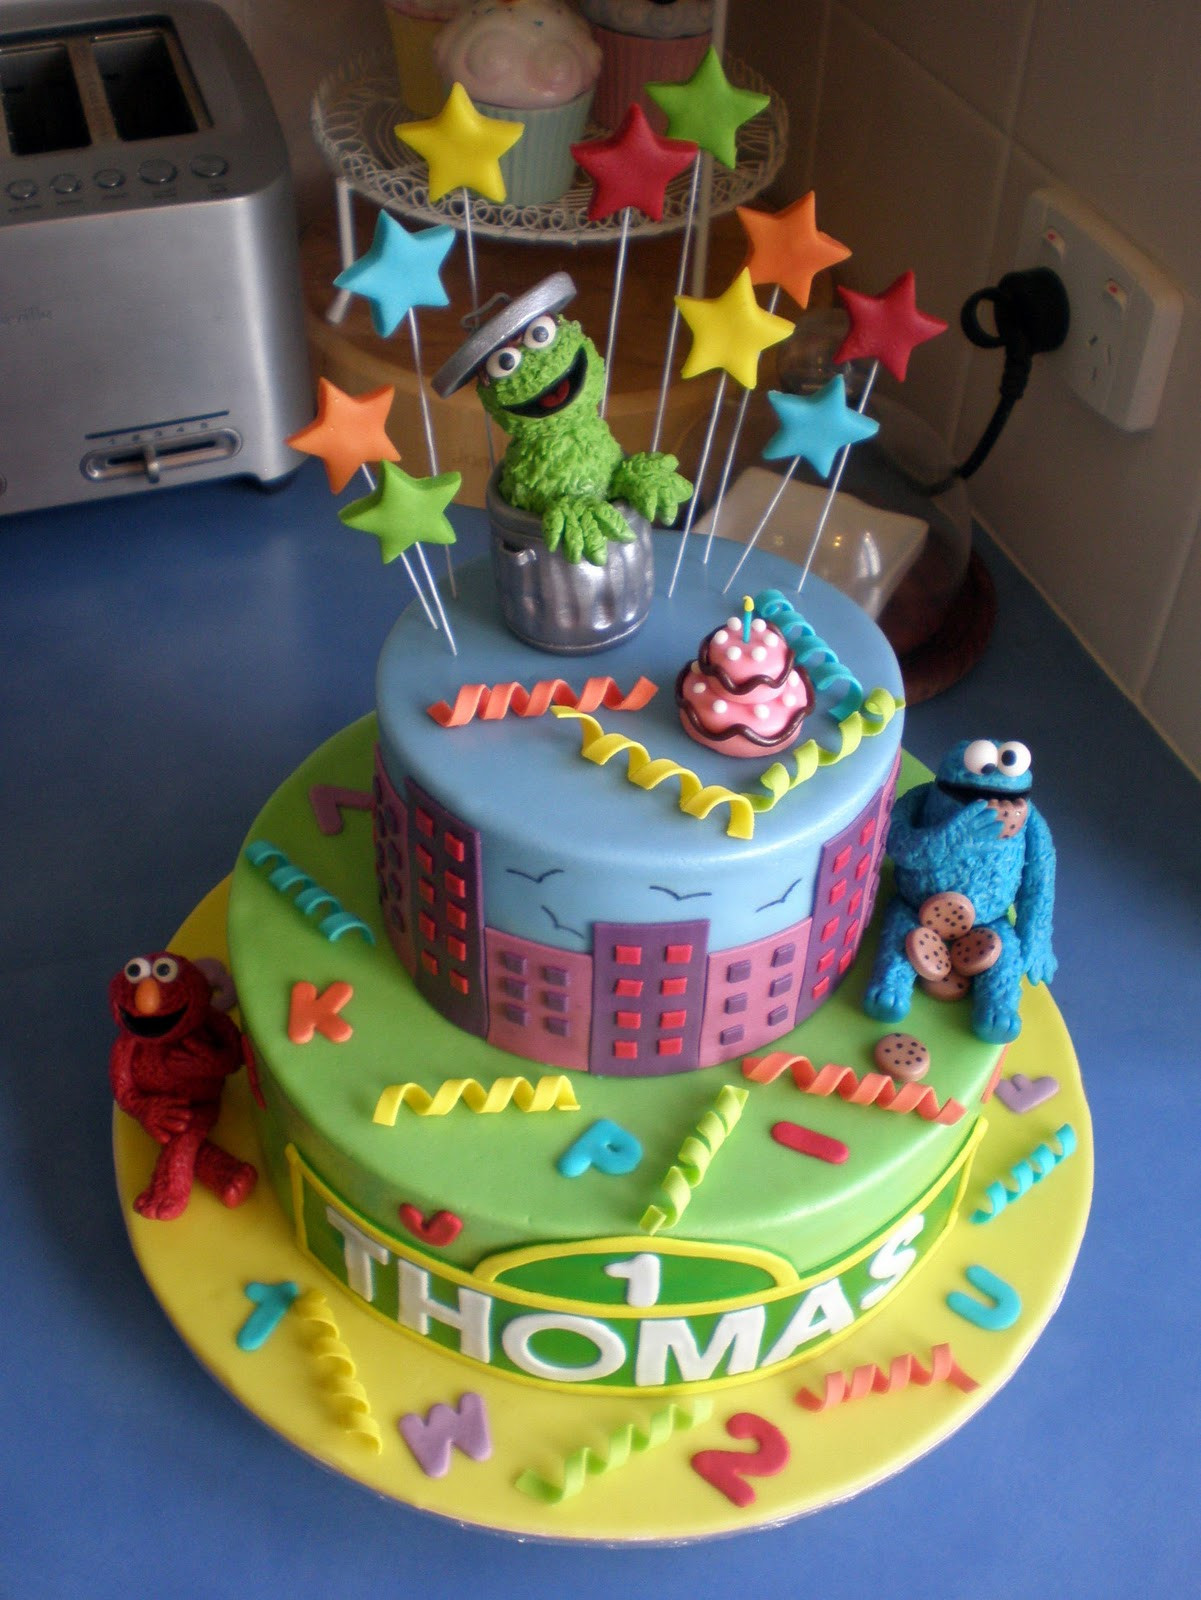 Best ideas about Sesame Street Birthday Cake
. Save or Pin Sugar Siren Cakes Mackay Sesame Street Birthday Cake Now.